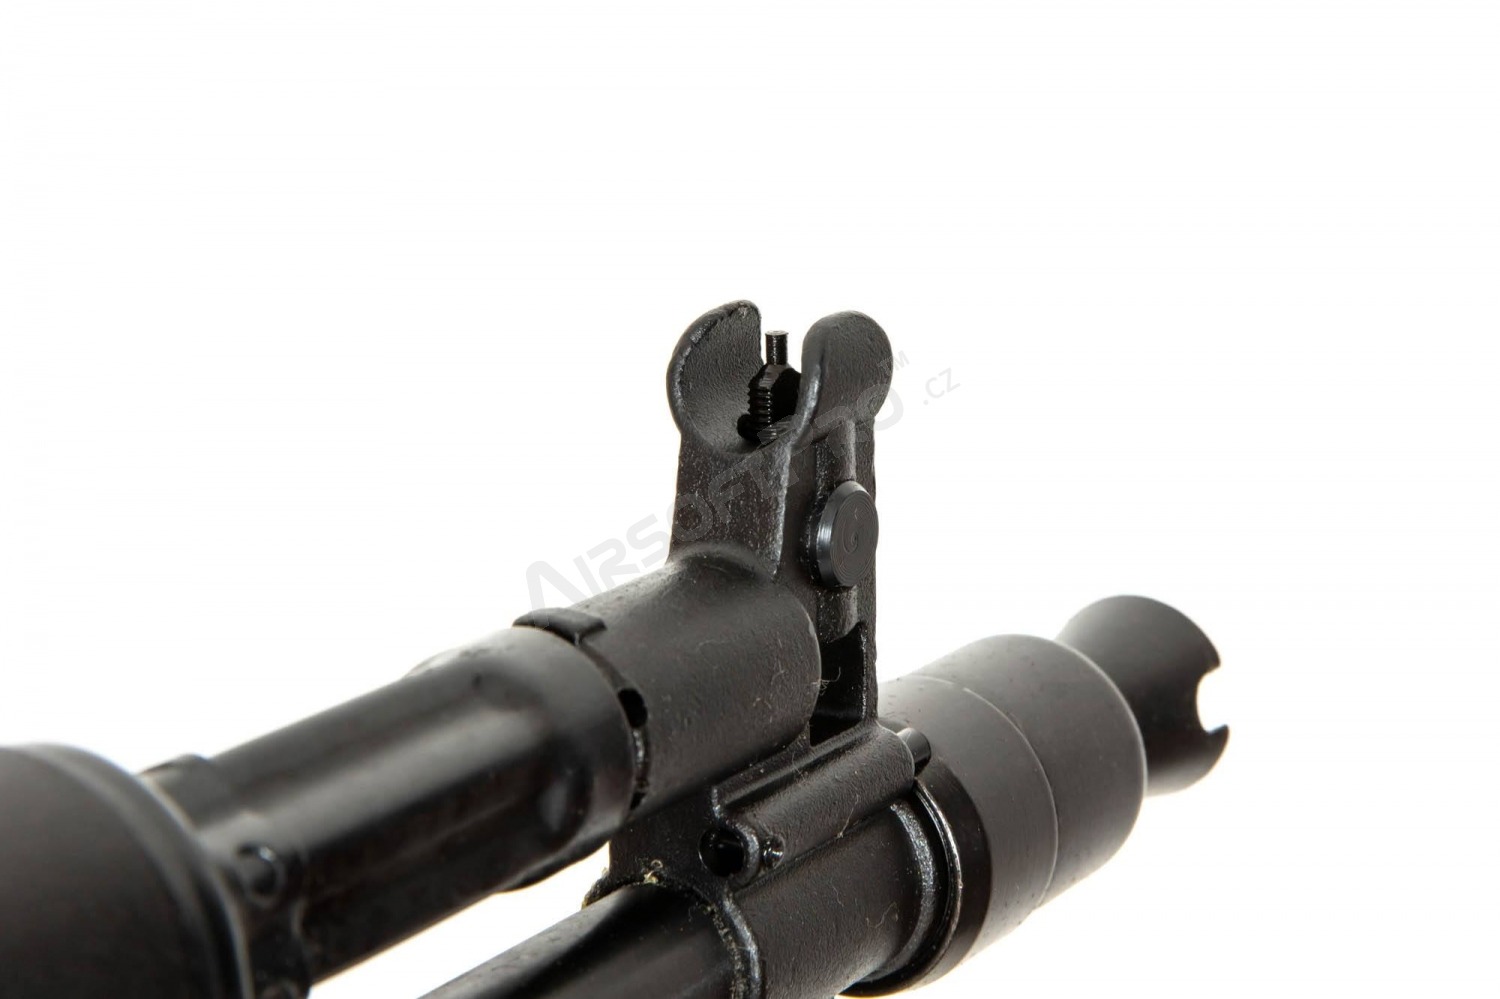 Airsoft assault rifle replica EL-AK105 Essential, Mosfet edition [E&L]